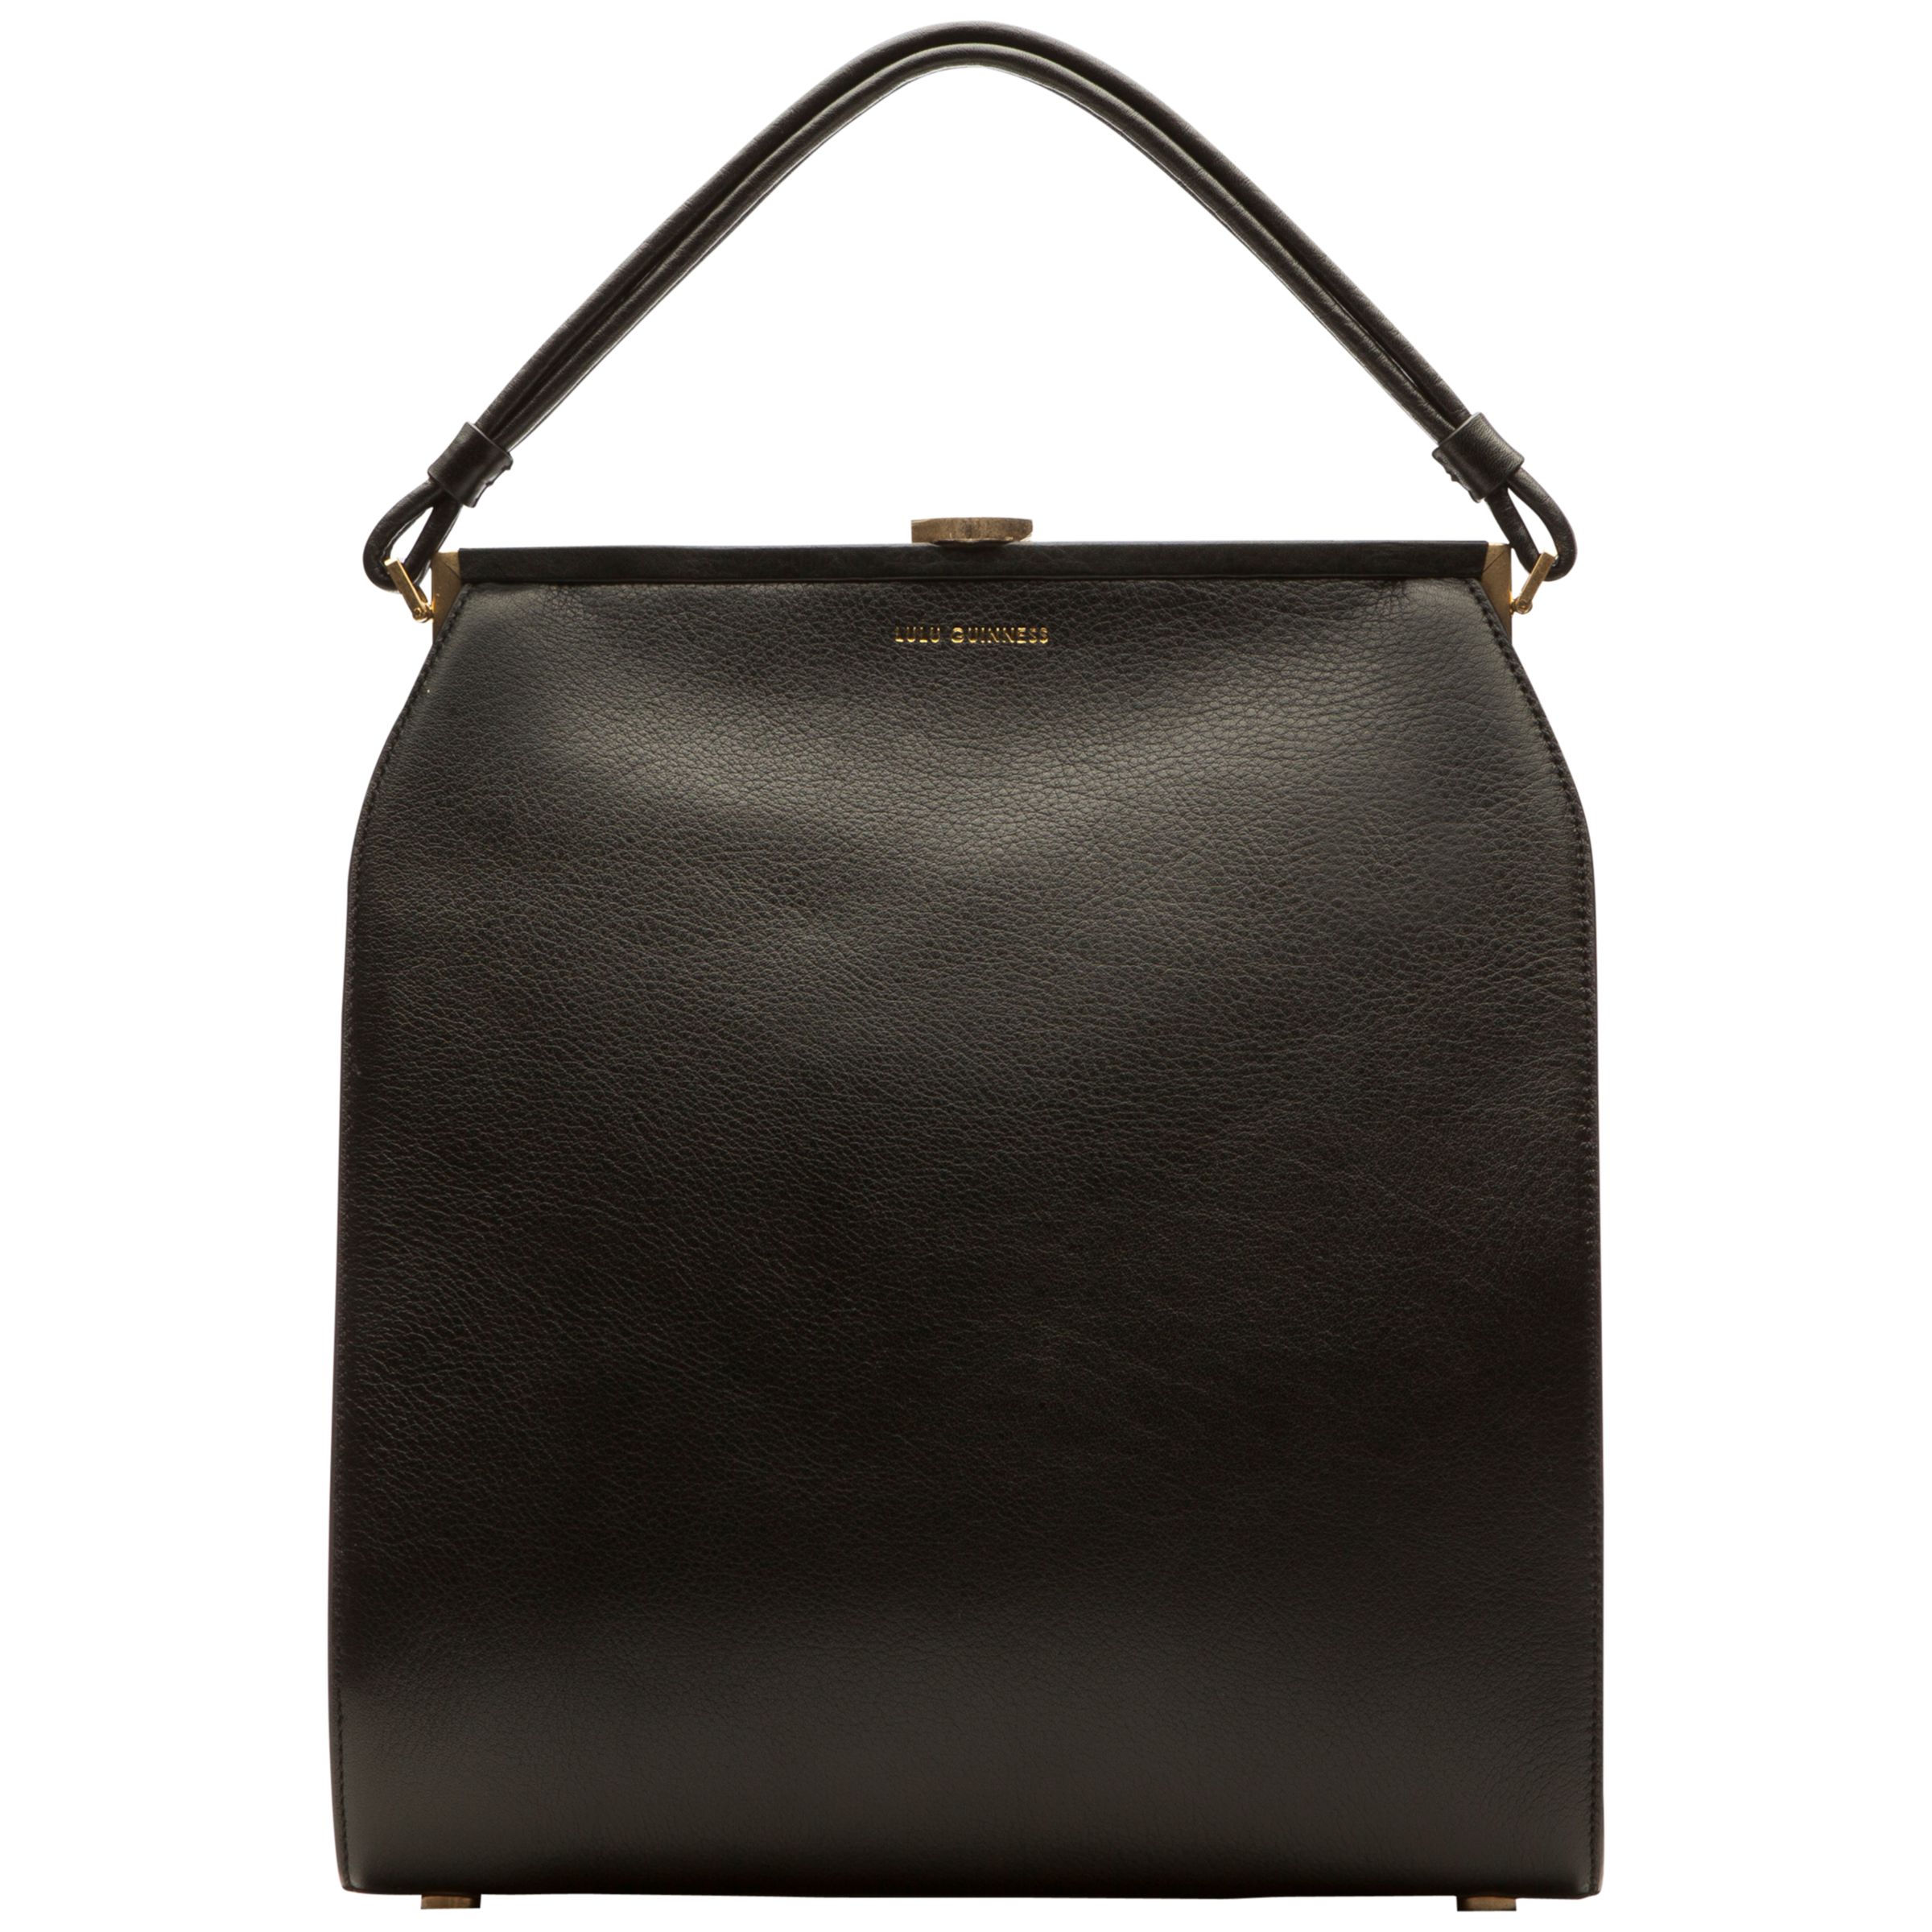 Lulu Guinness Victoria Leather Medium Shoulder Bag, Black